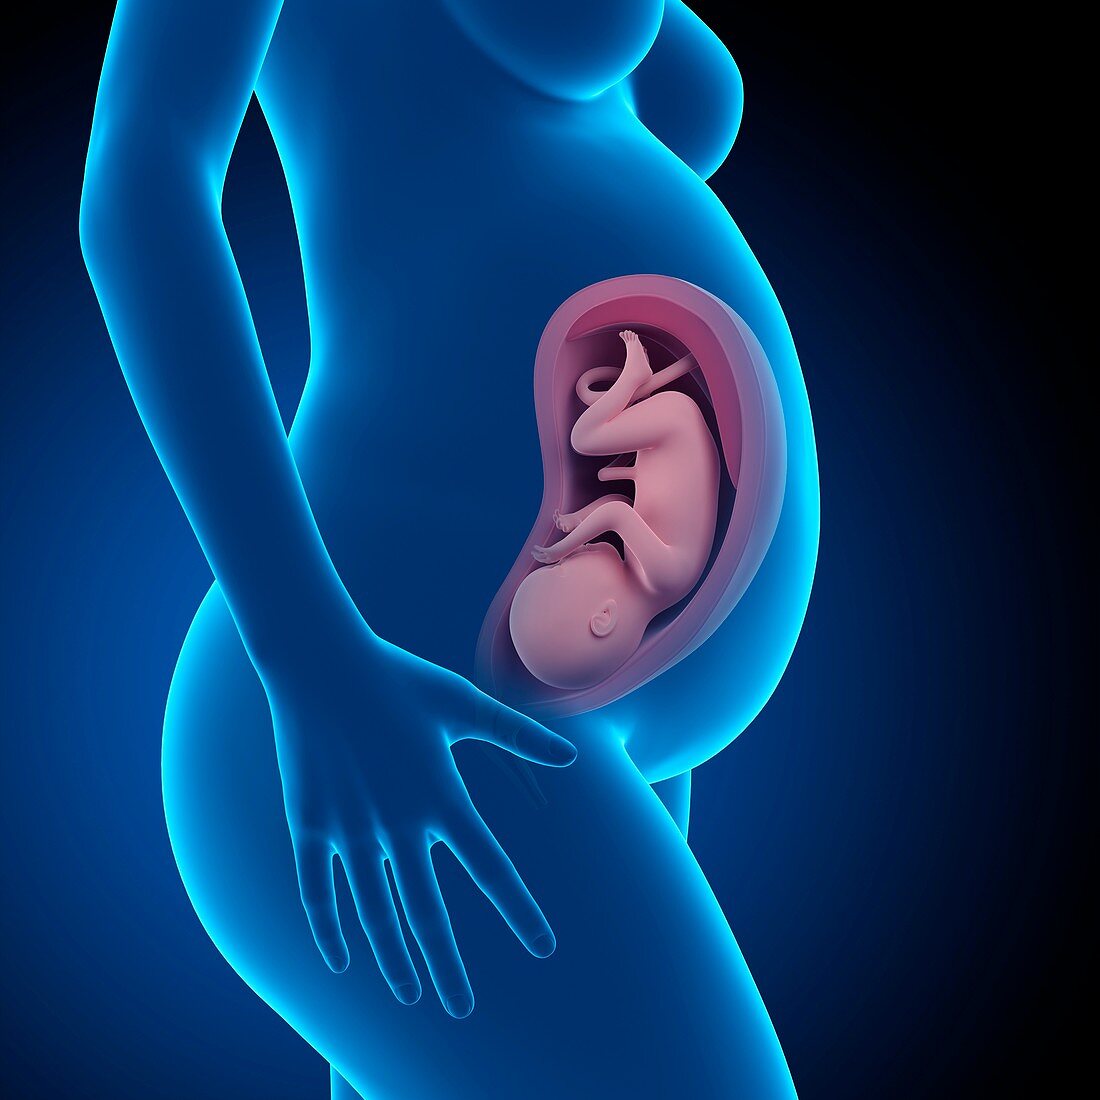 Human fetus age 35 weeks